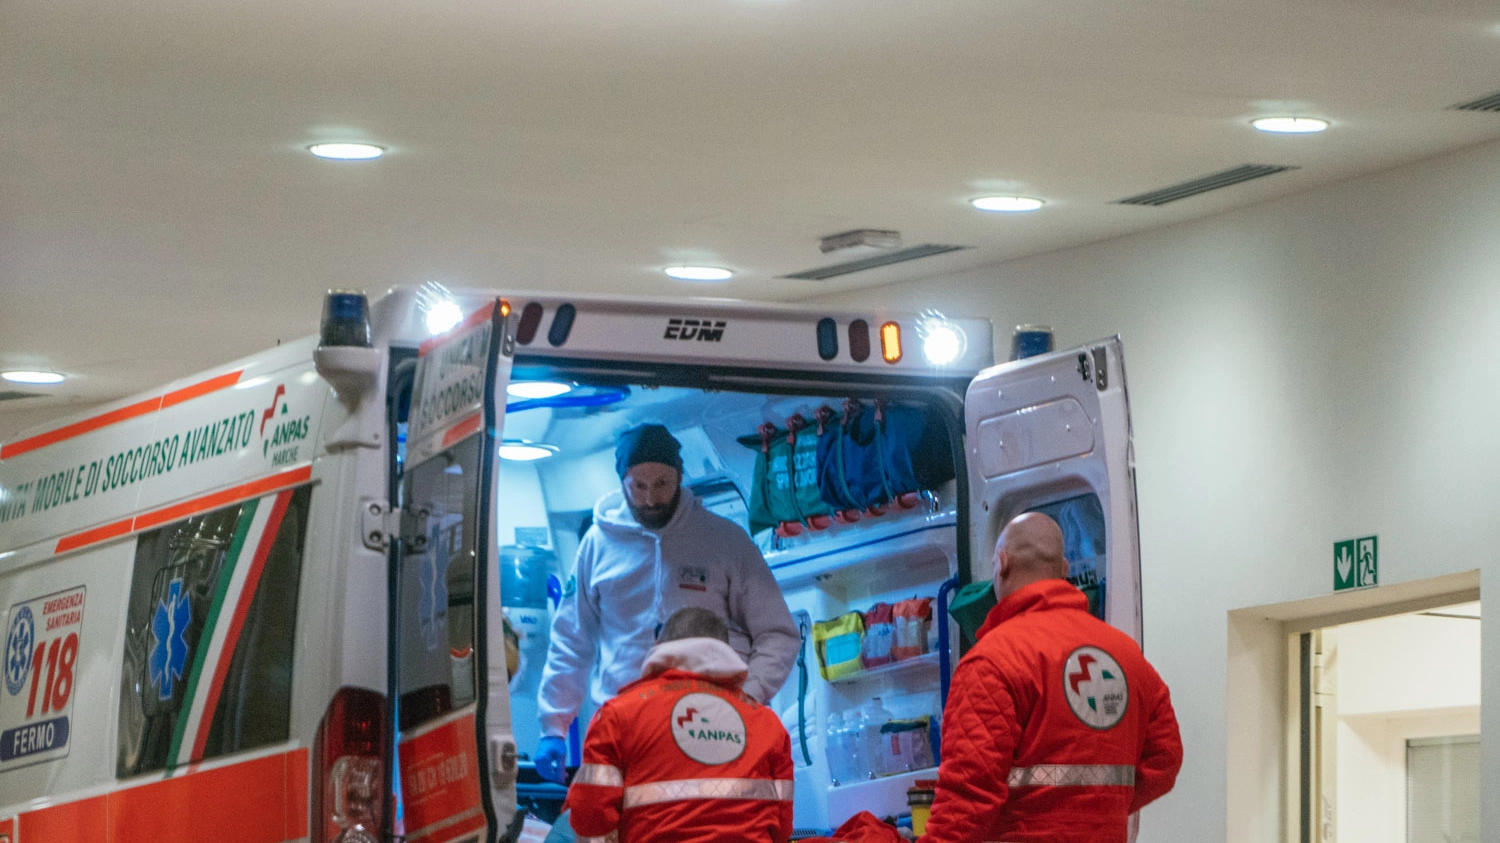 Beve varechina, portata all'ospedale di Fermo (Foto Zeppilli)